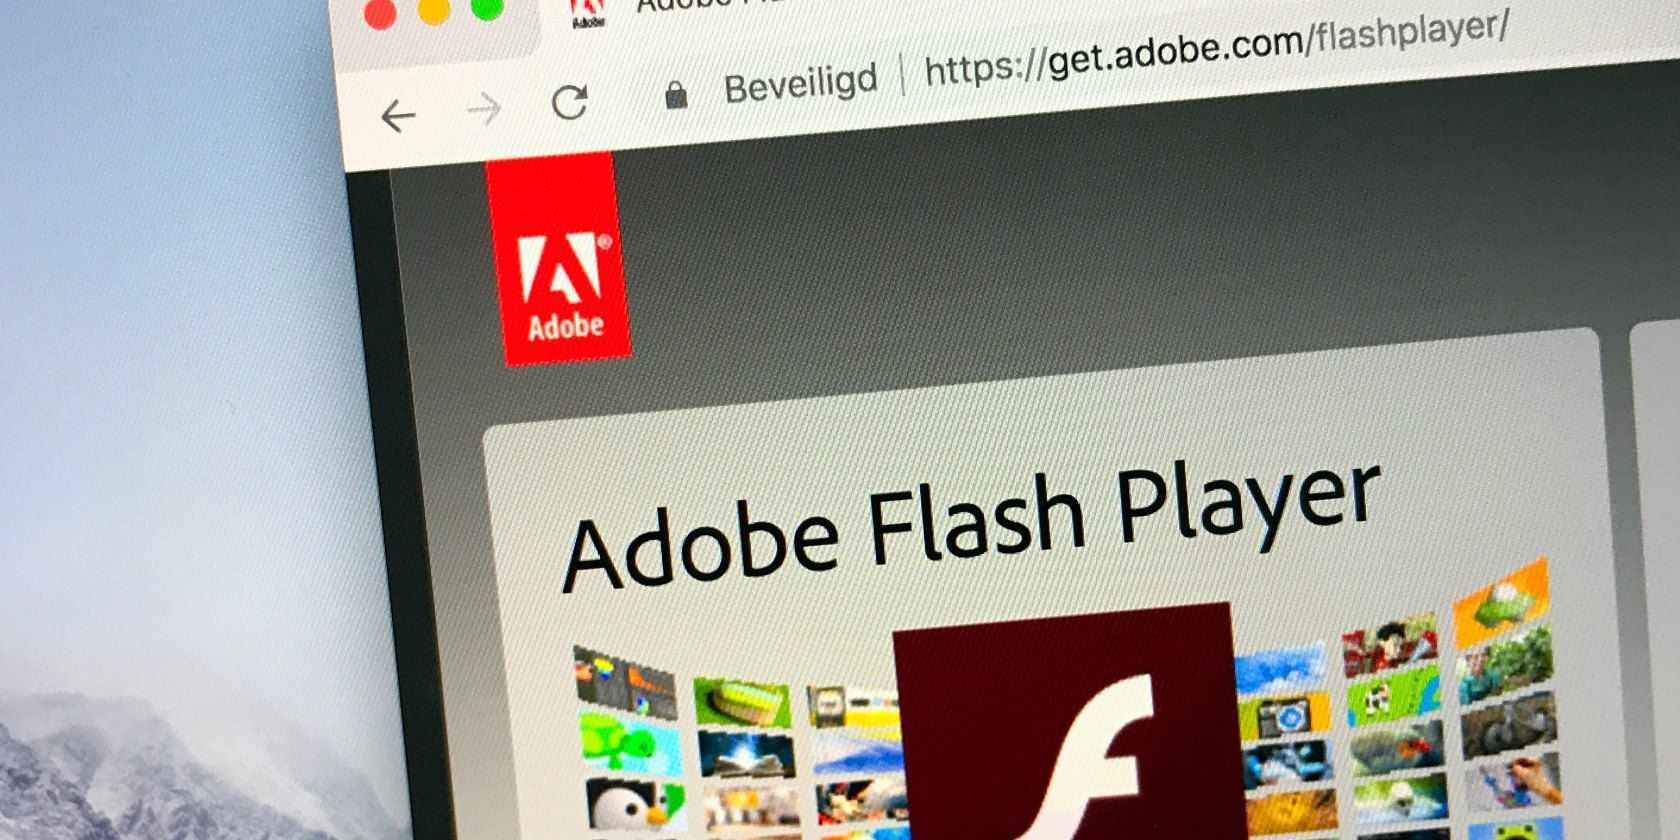 The Adobe Flash Player webpage